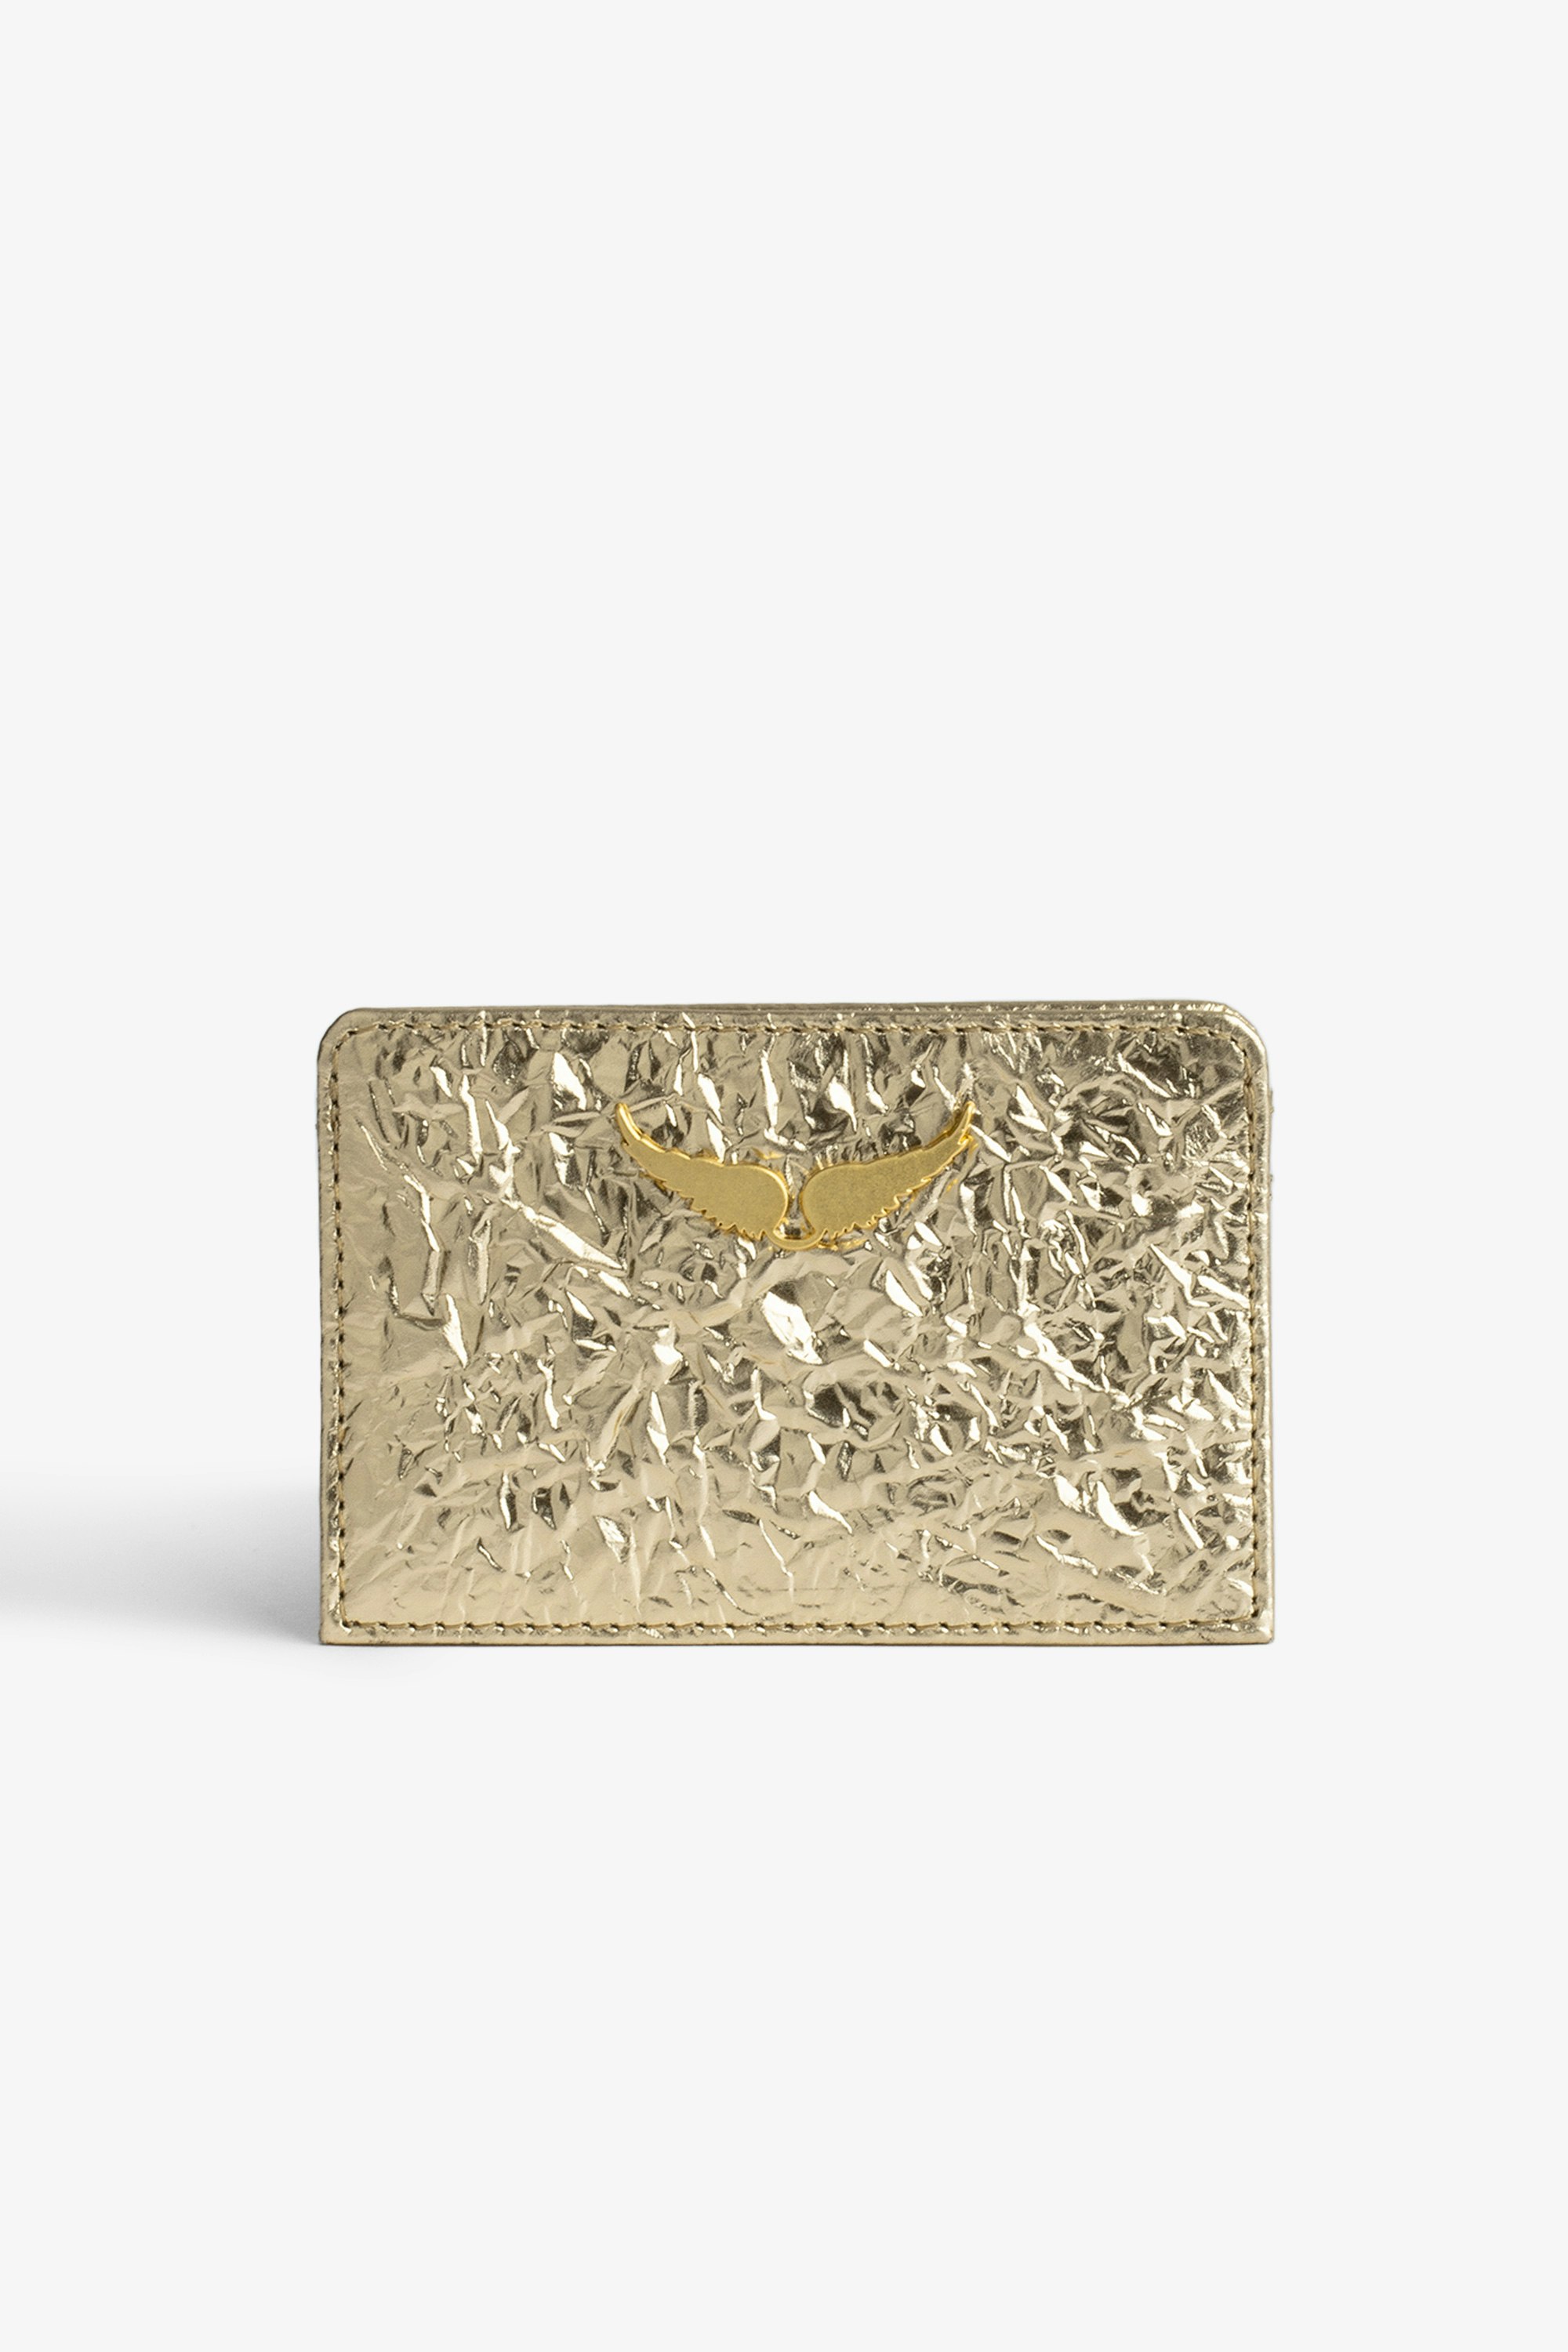 ZV Pass 財布 Women’s metallic gold crinkled leather card holder